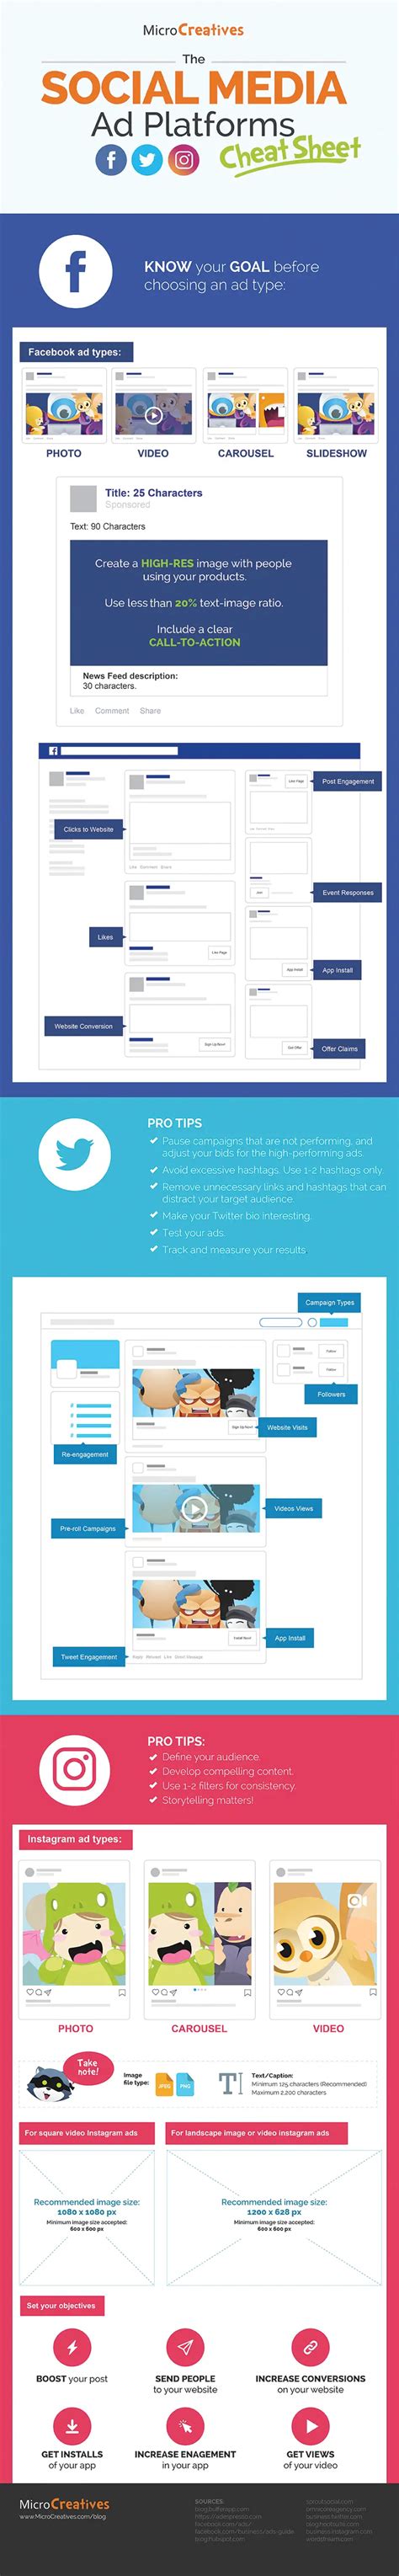 The Social Media Ad Platforms Cheat Sheet Infographic Business Partner Magazine